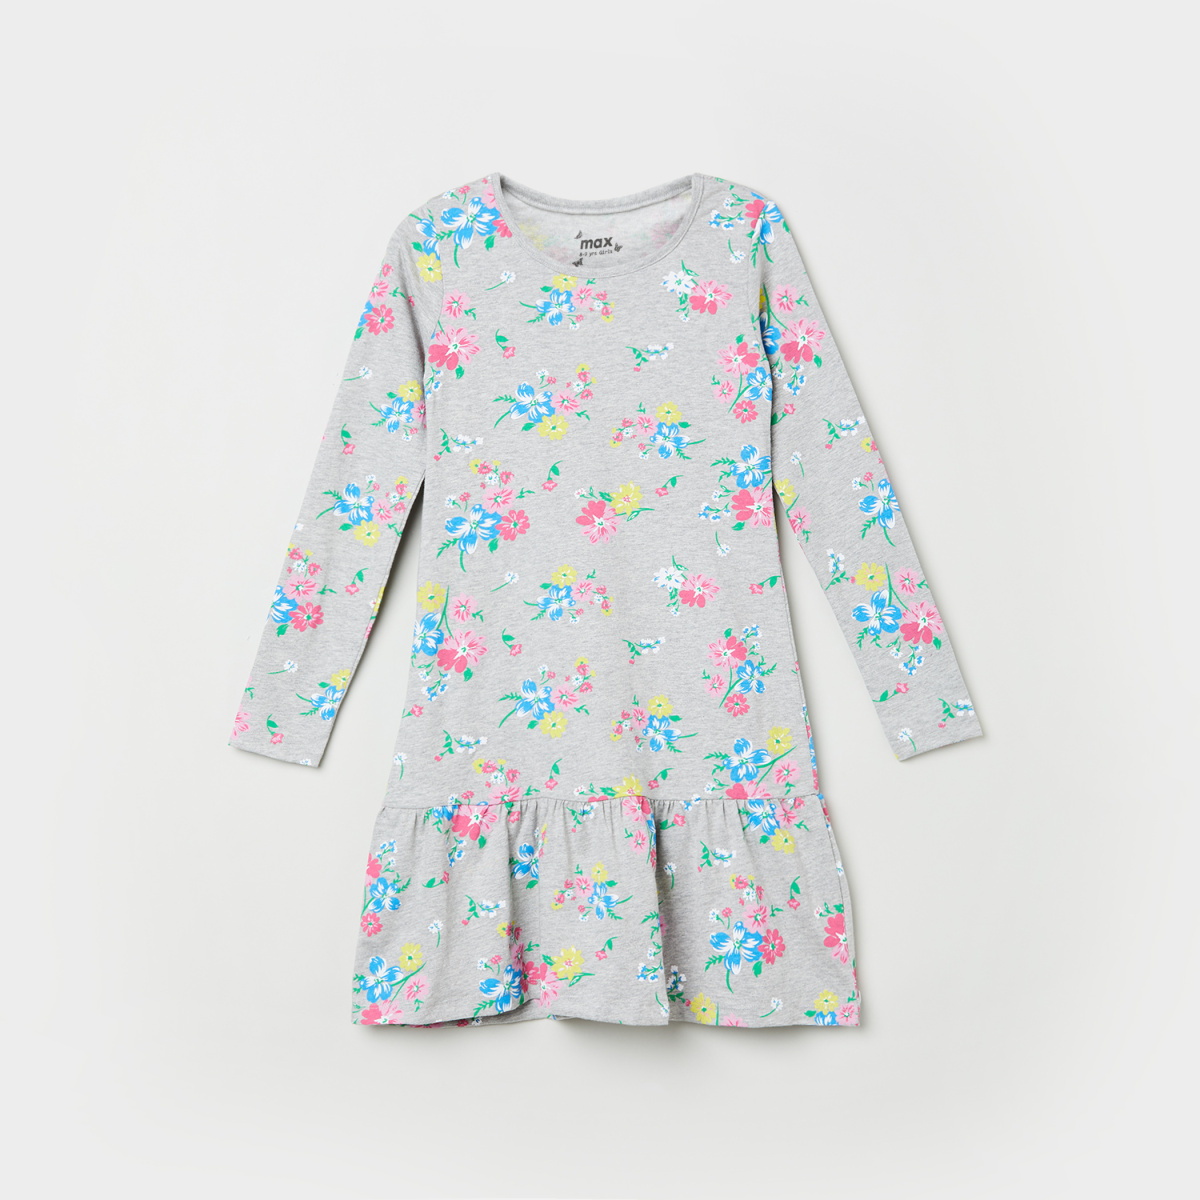 Buy Girls Blue Floral Printed Flared Dress Online - Aurelia